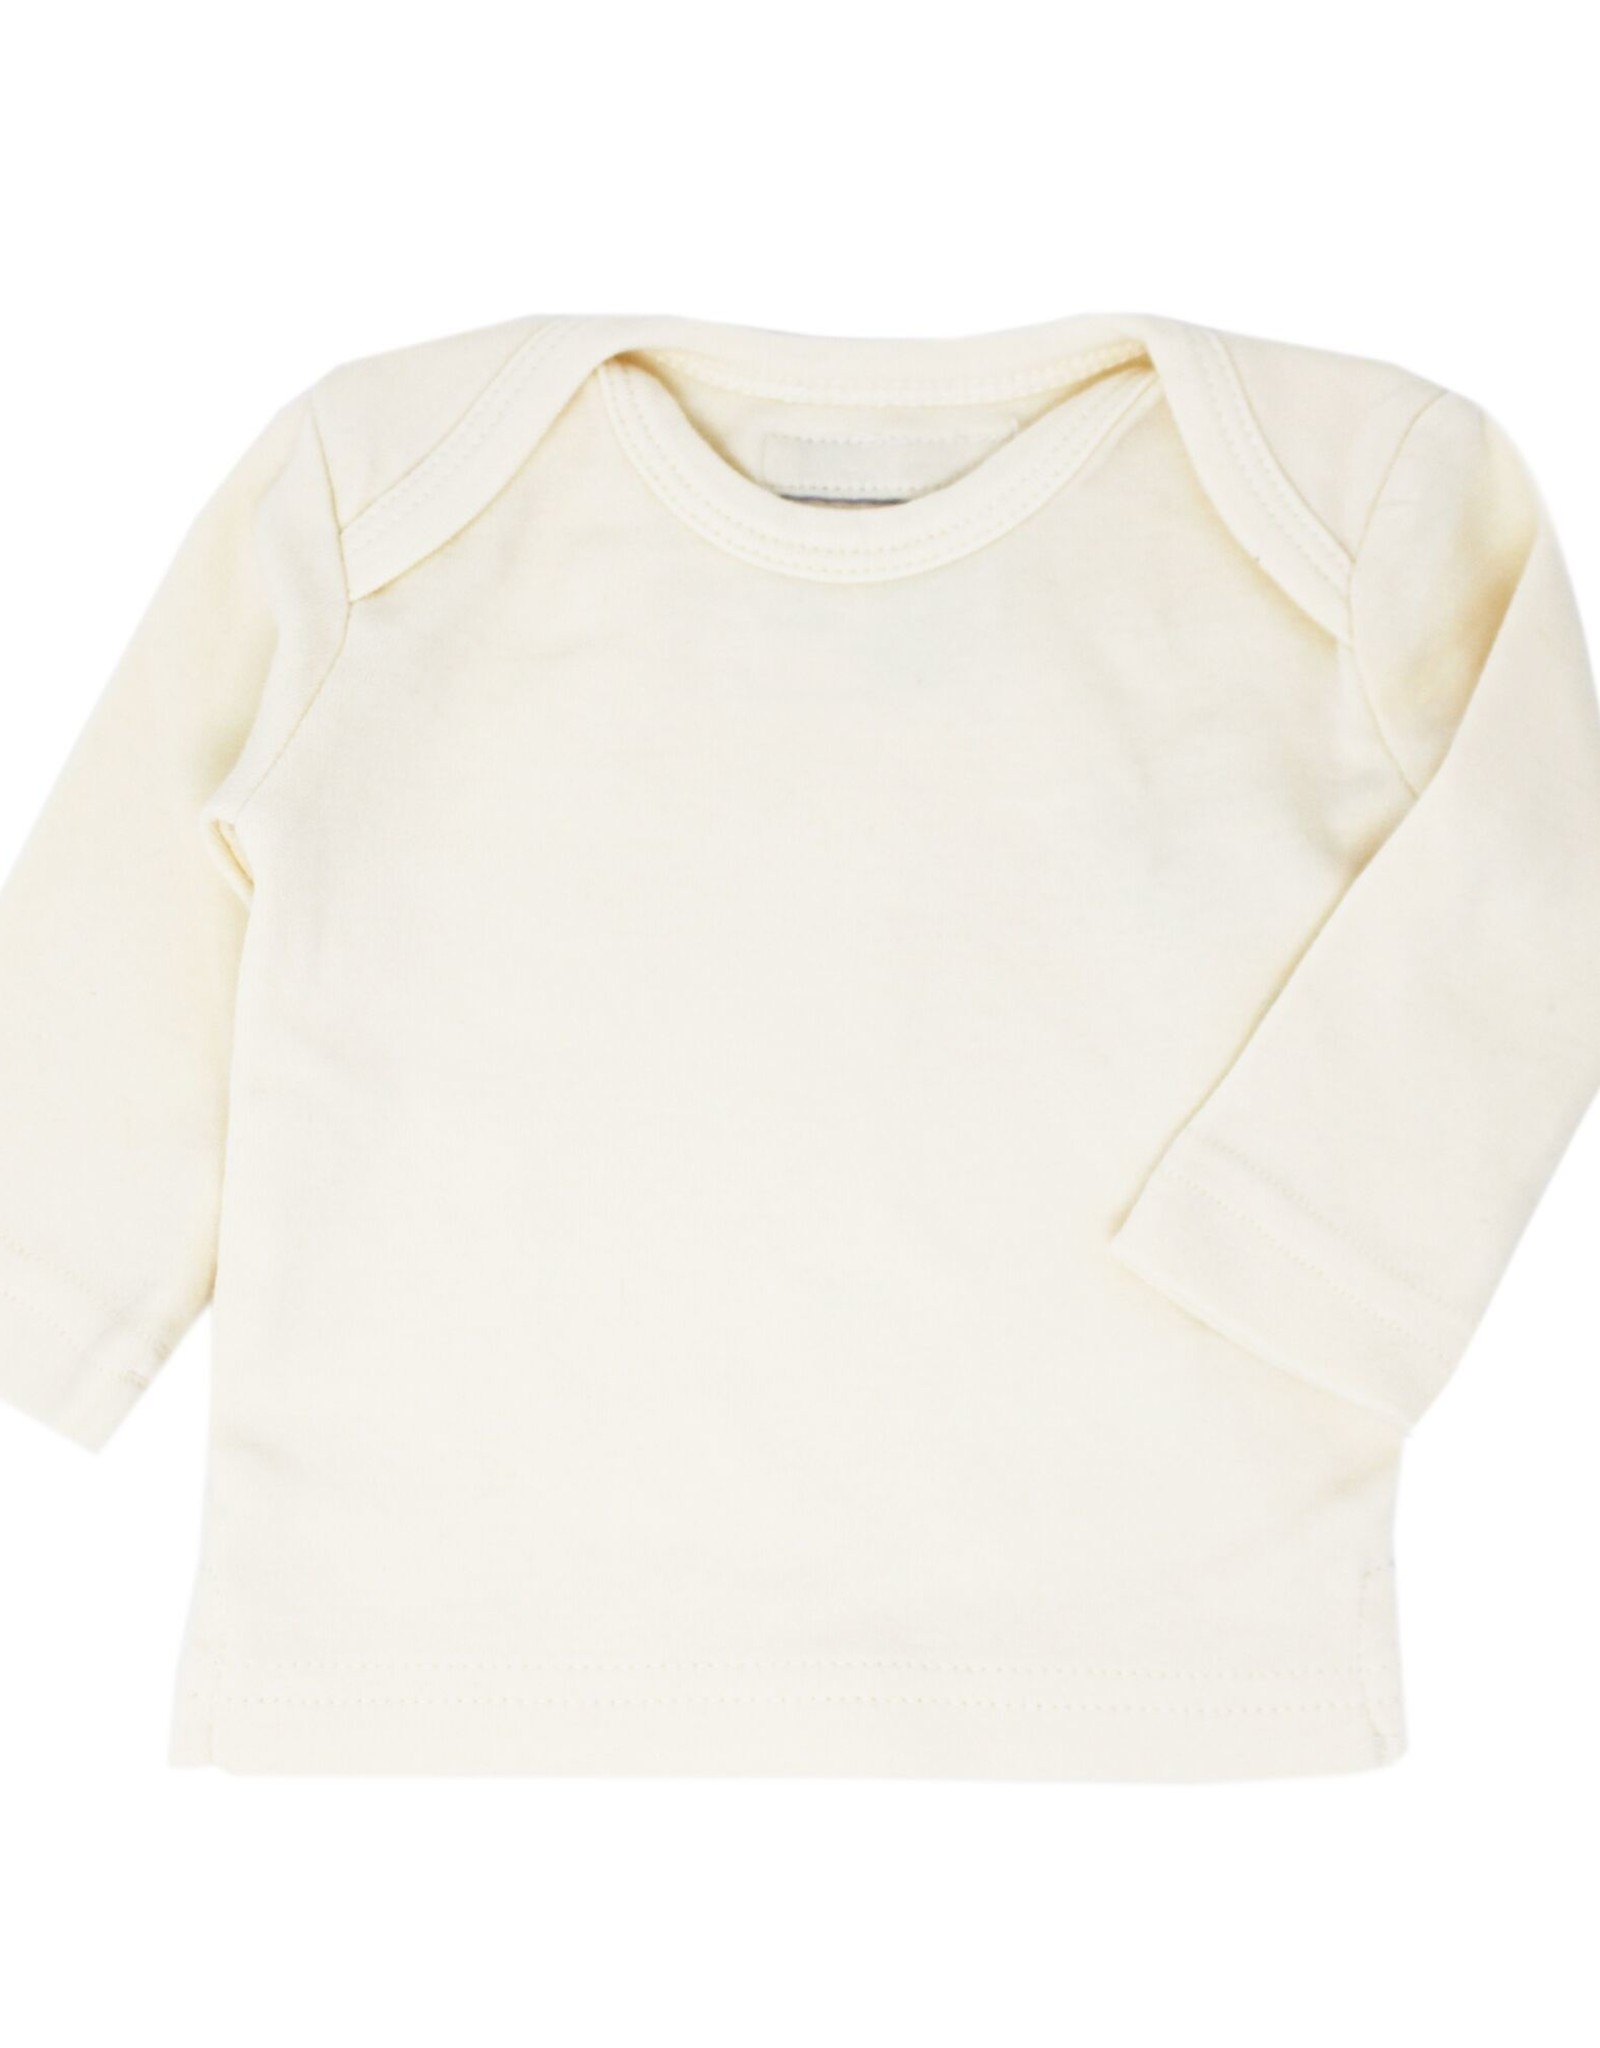 L'oved Baby Organic Cotton Long Sleeve Shirt- Buttercream